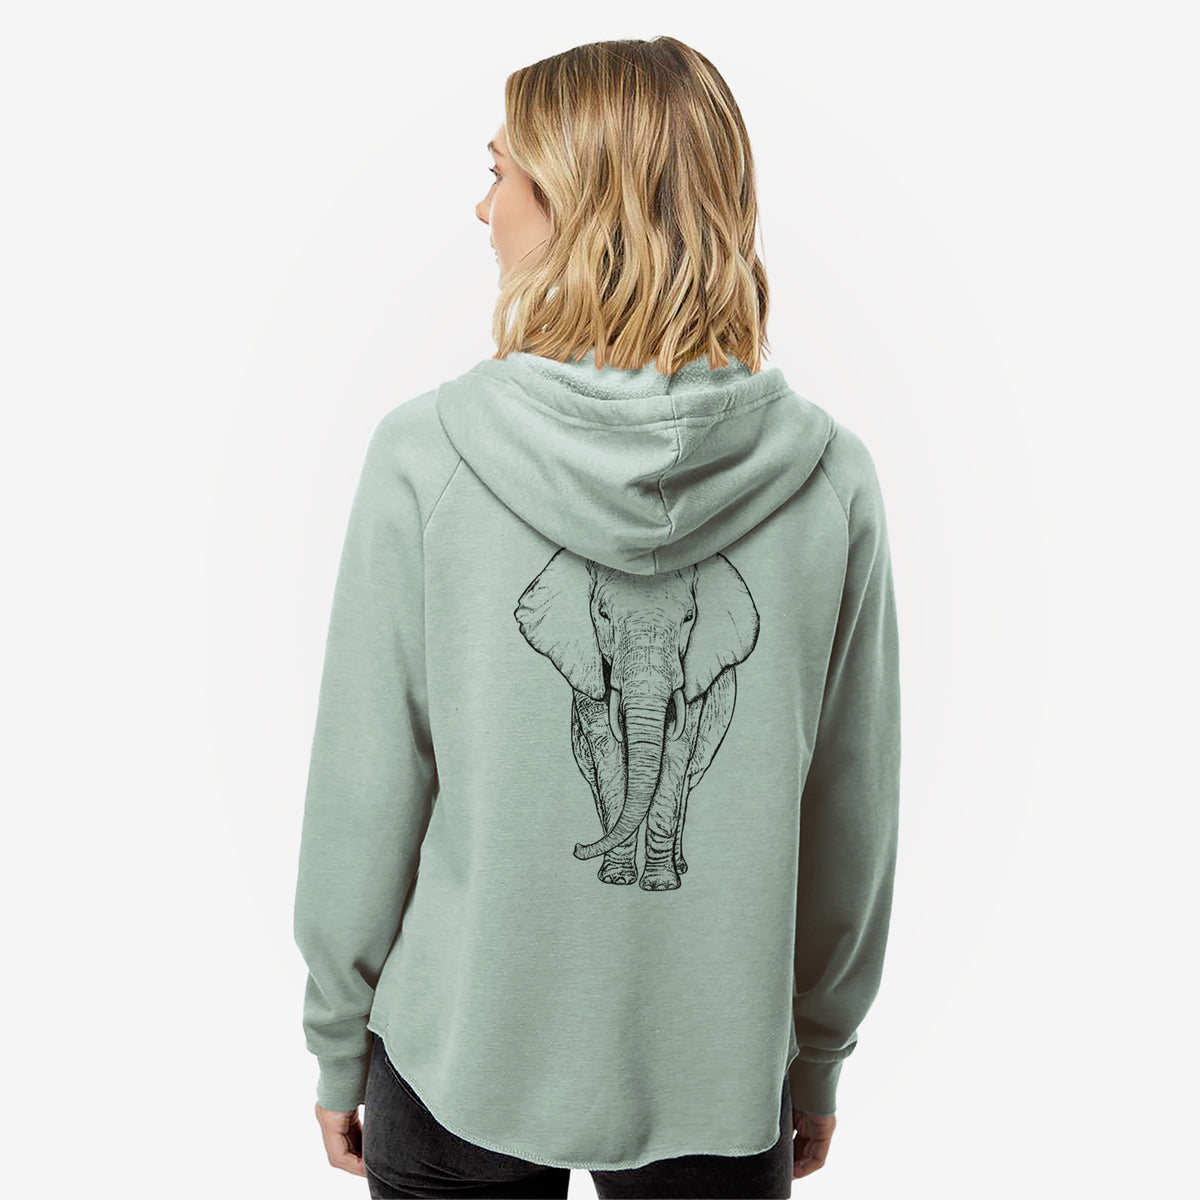 Loxodonta africana - African Elephant - Women&#39;s Cali Wave Zip-Up Sweatshirt